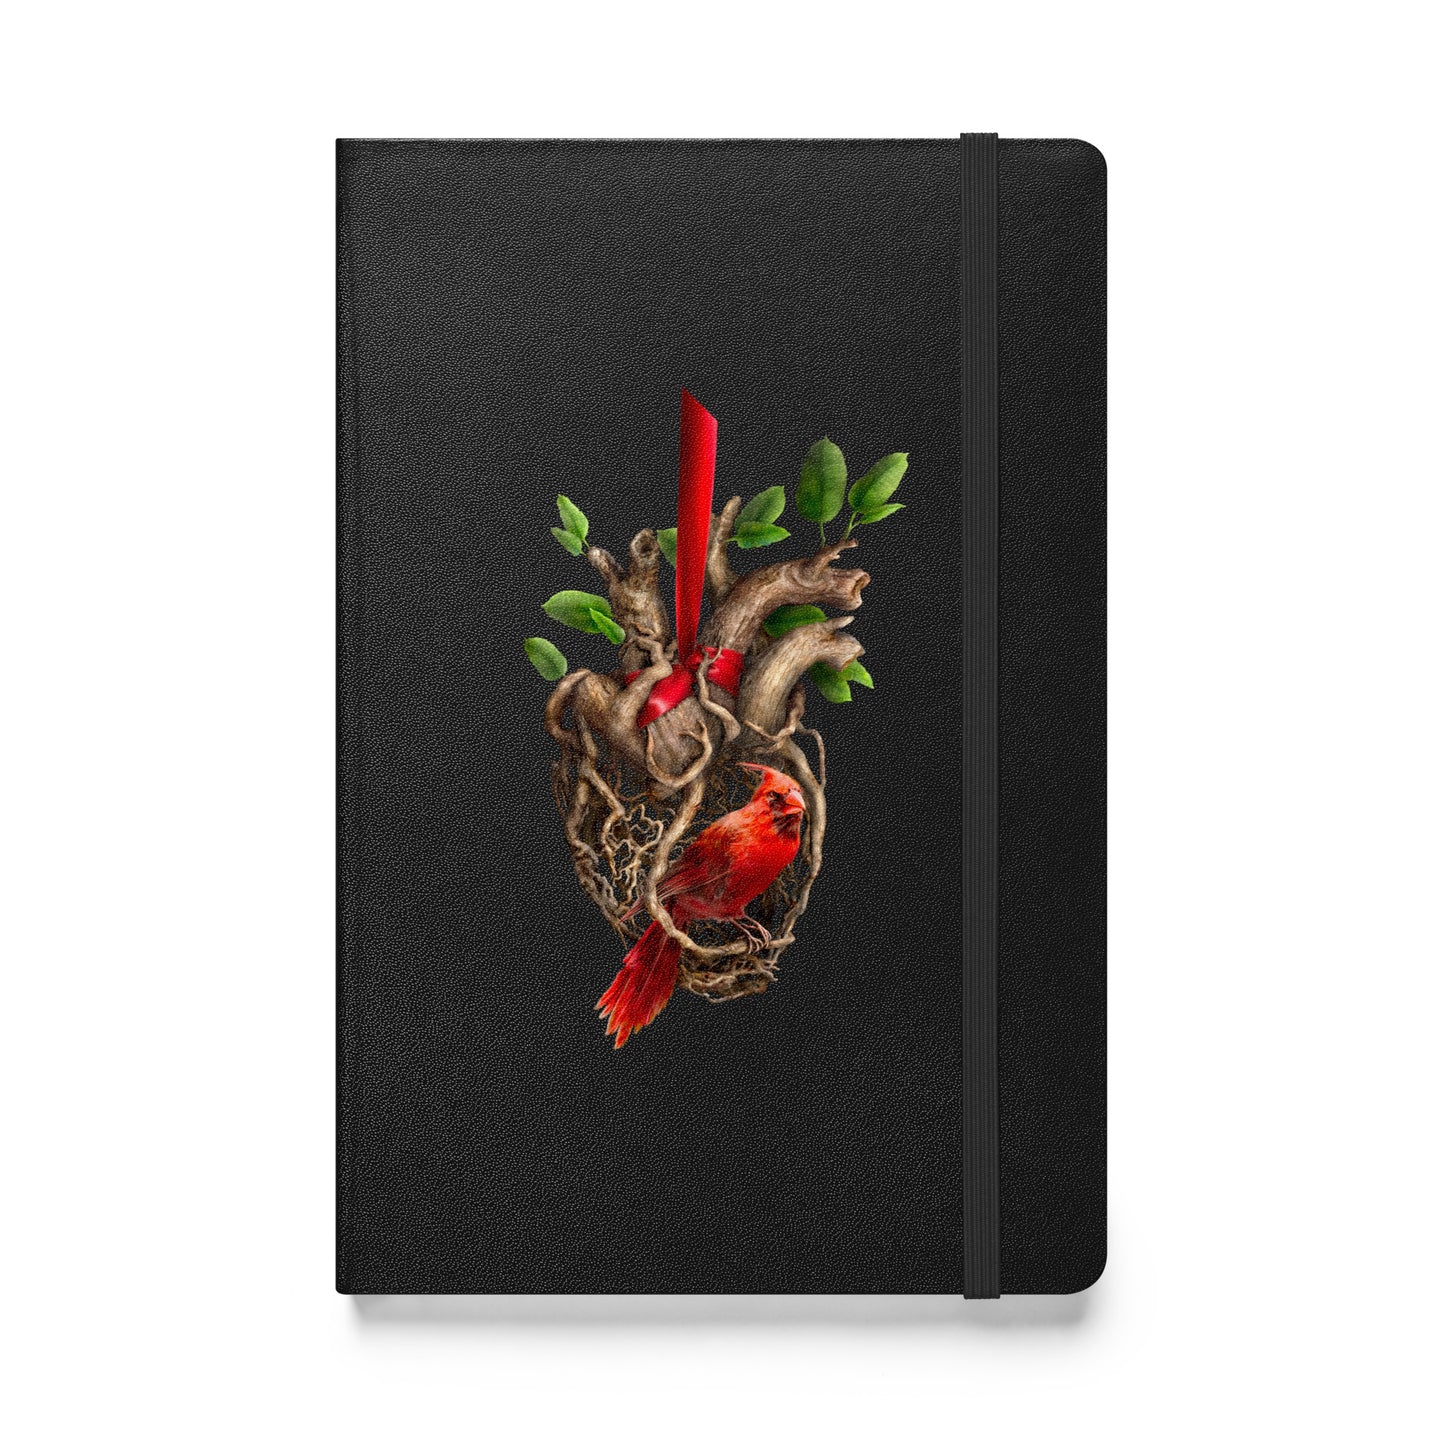 Heart of a Songbird hardcover bound notebook